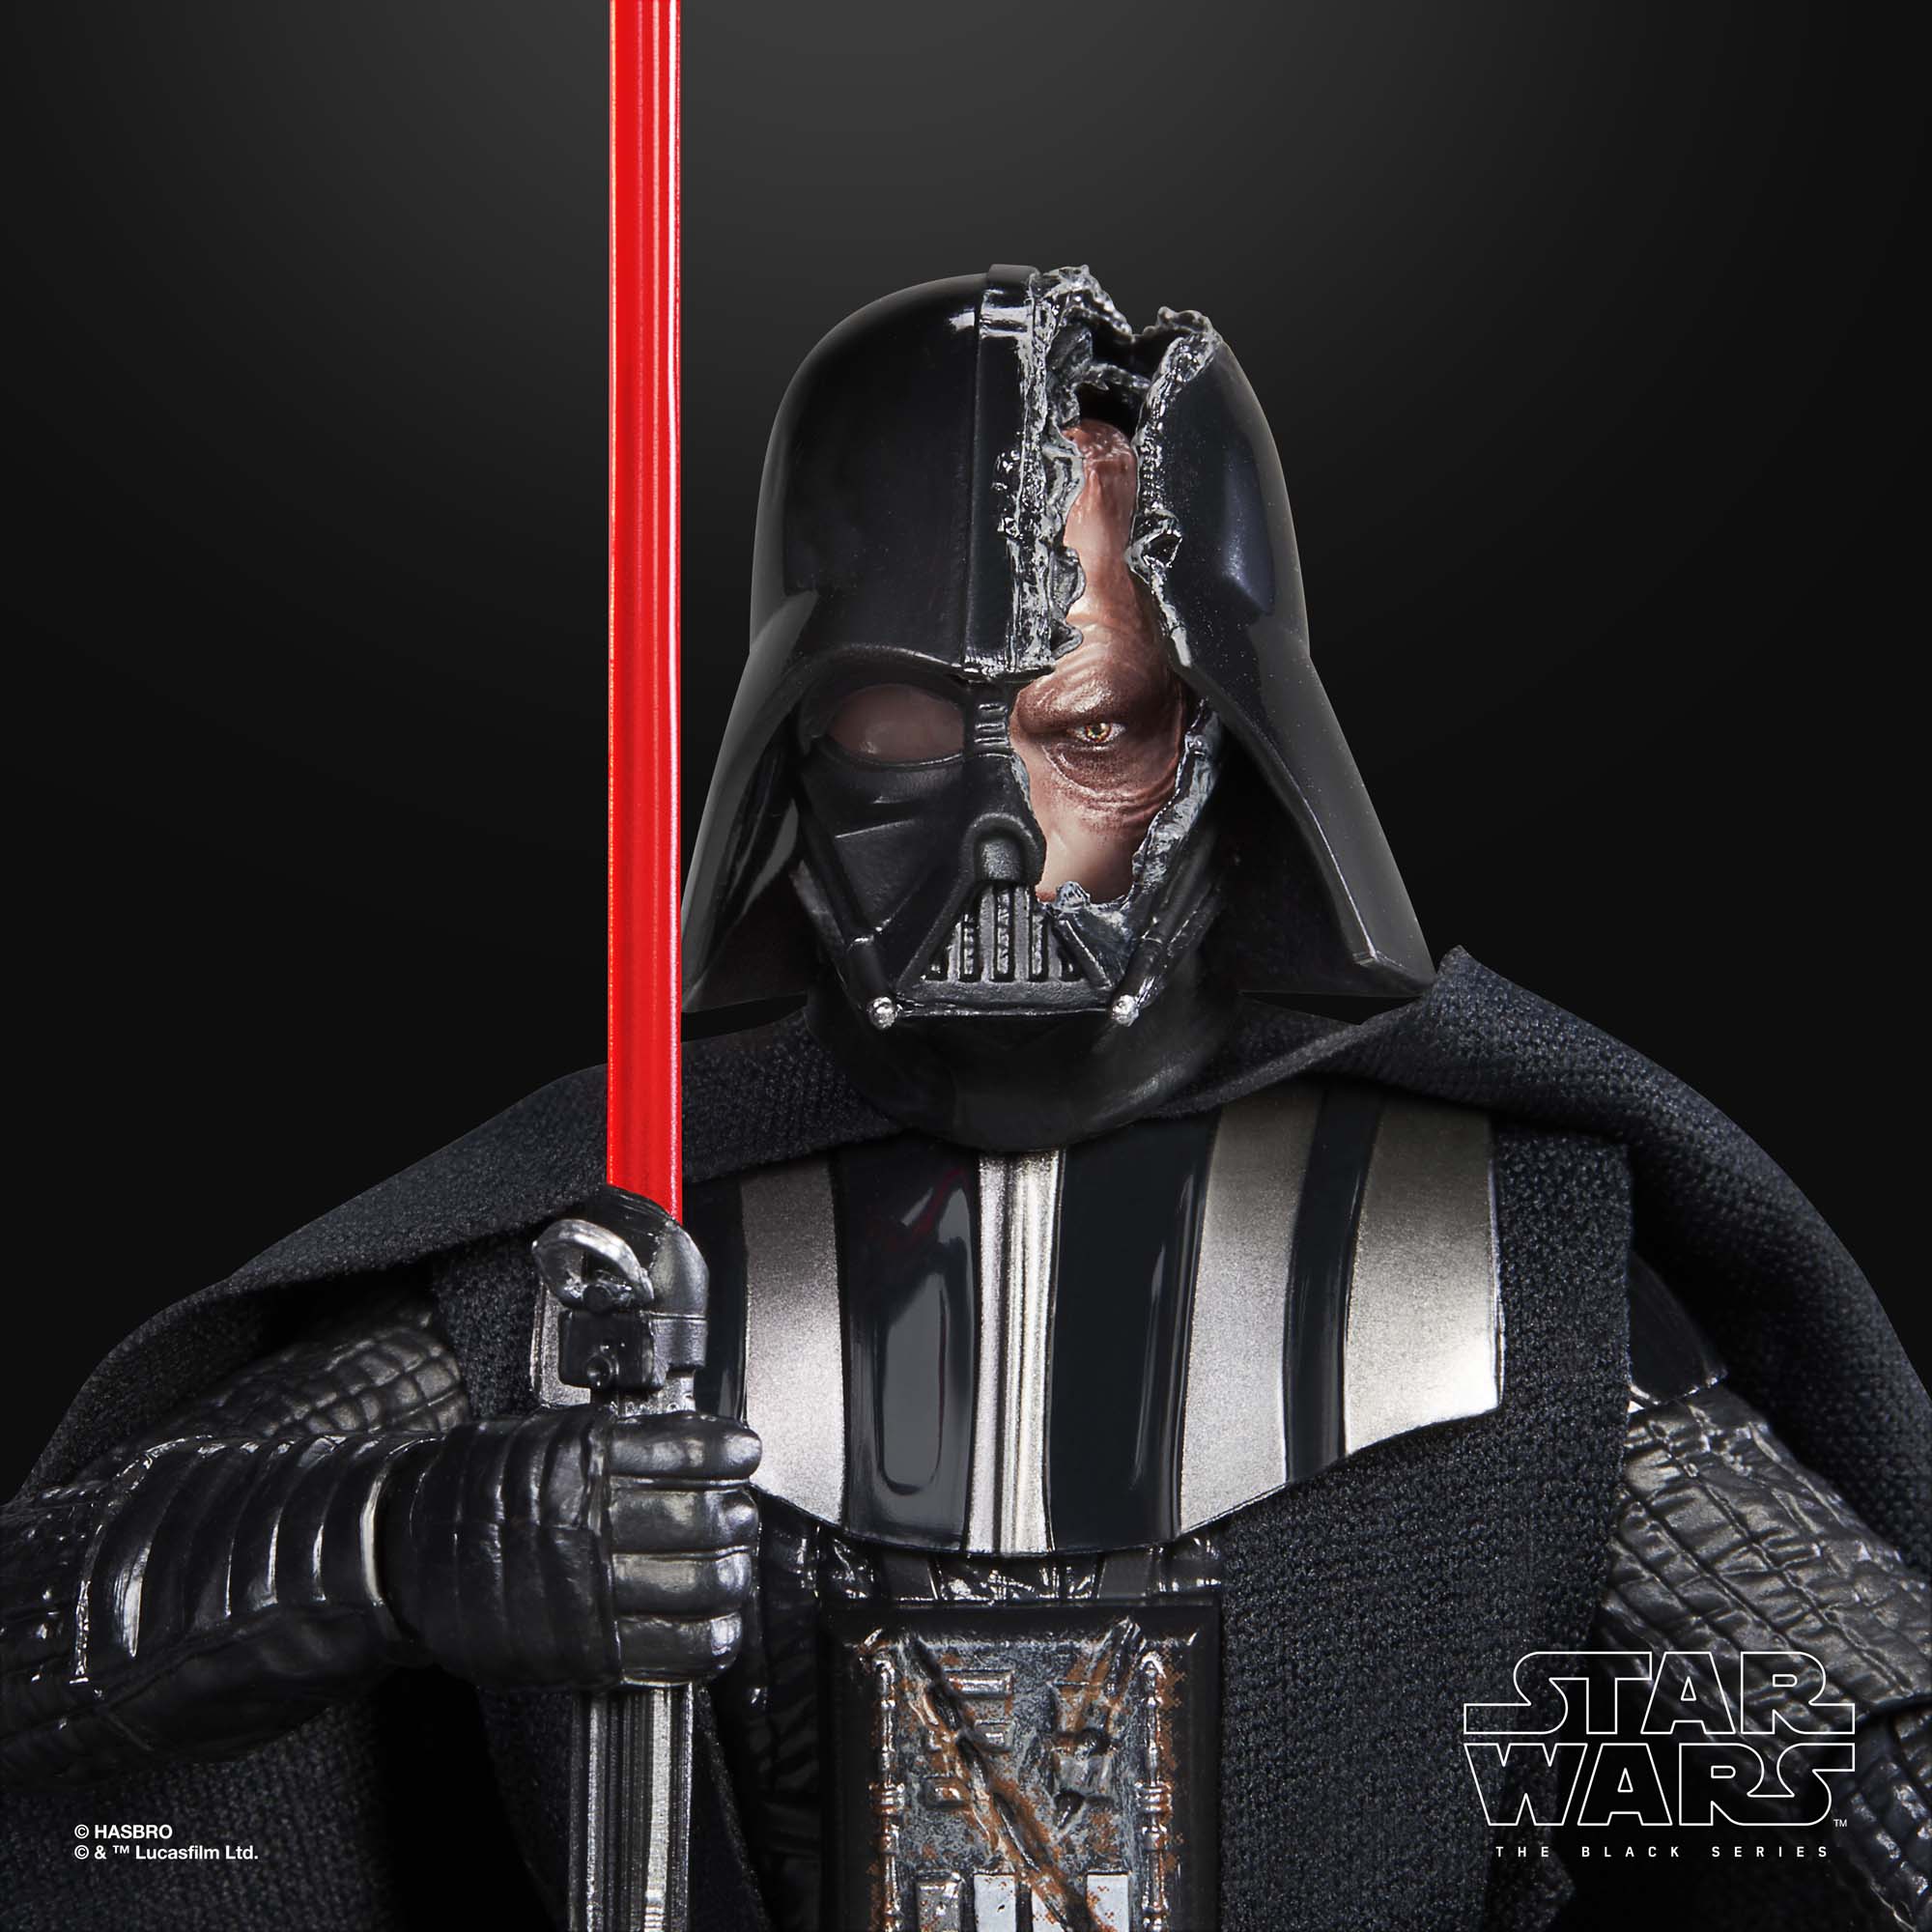 Star Wars Black Series: 'Obi-Wan Kenobi' Darth Vader and Commander Appo revealed